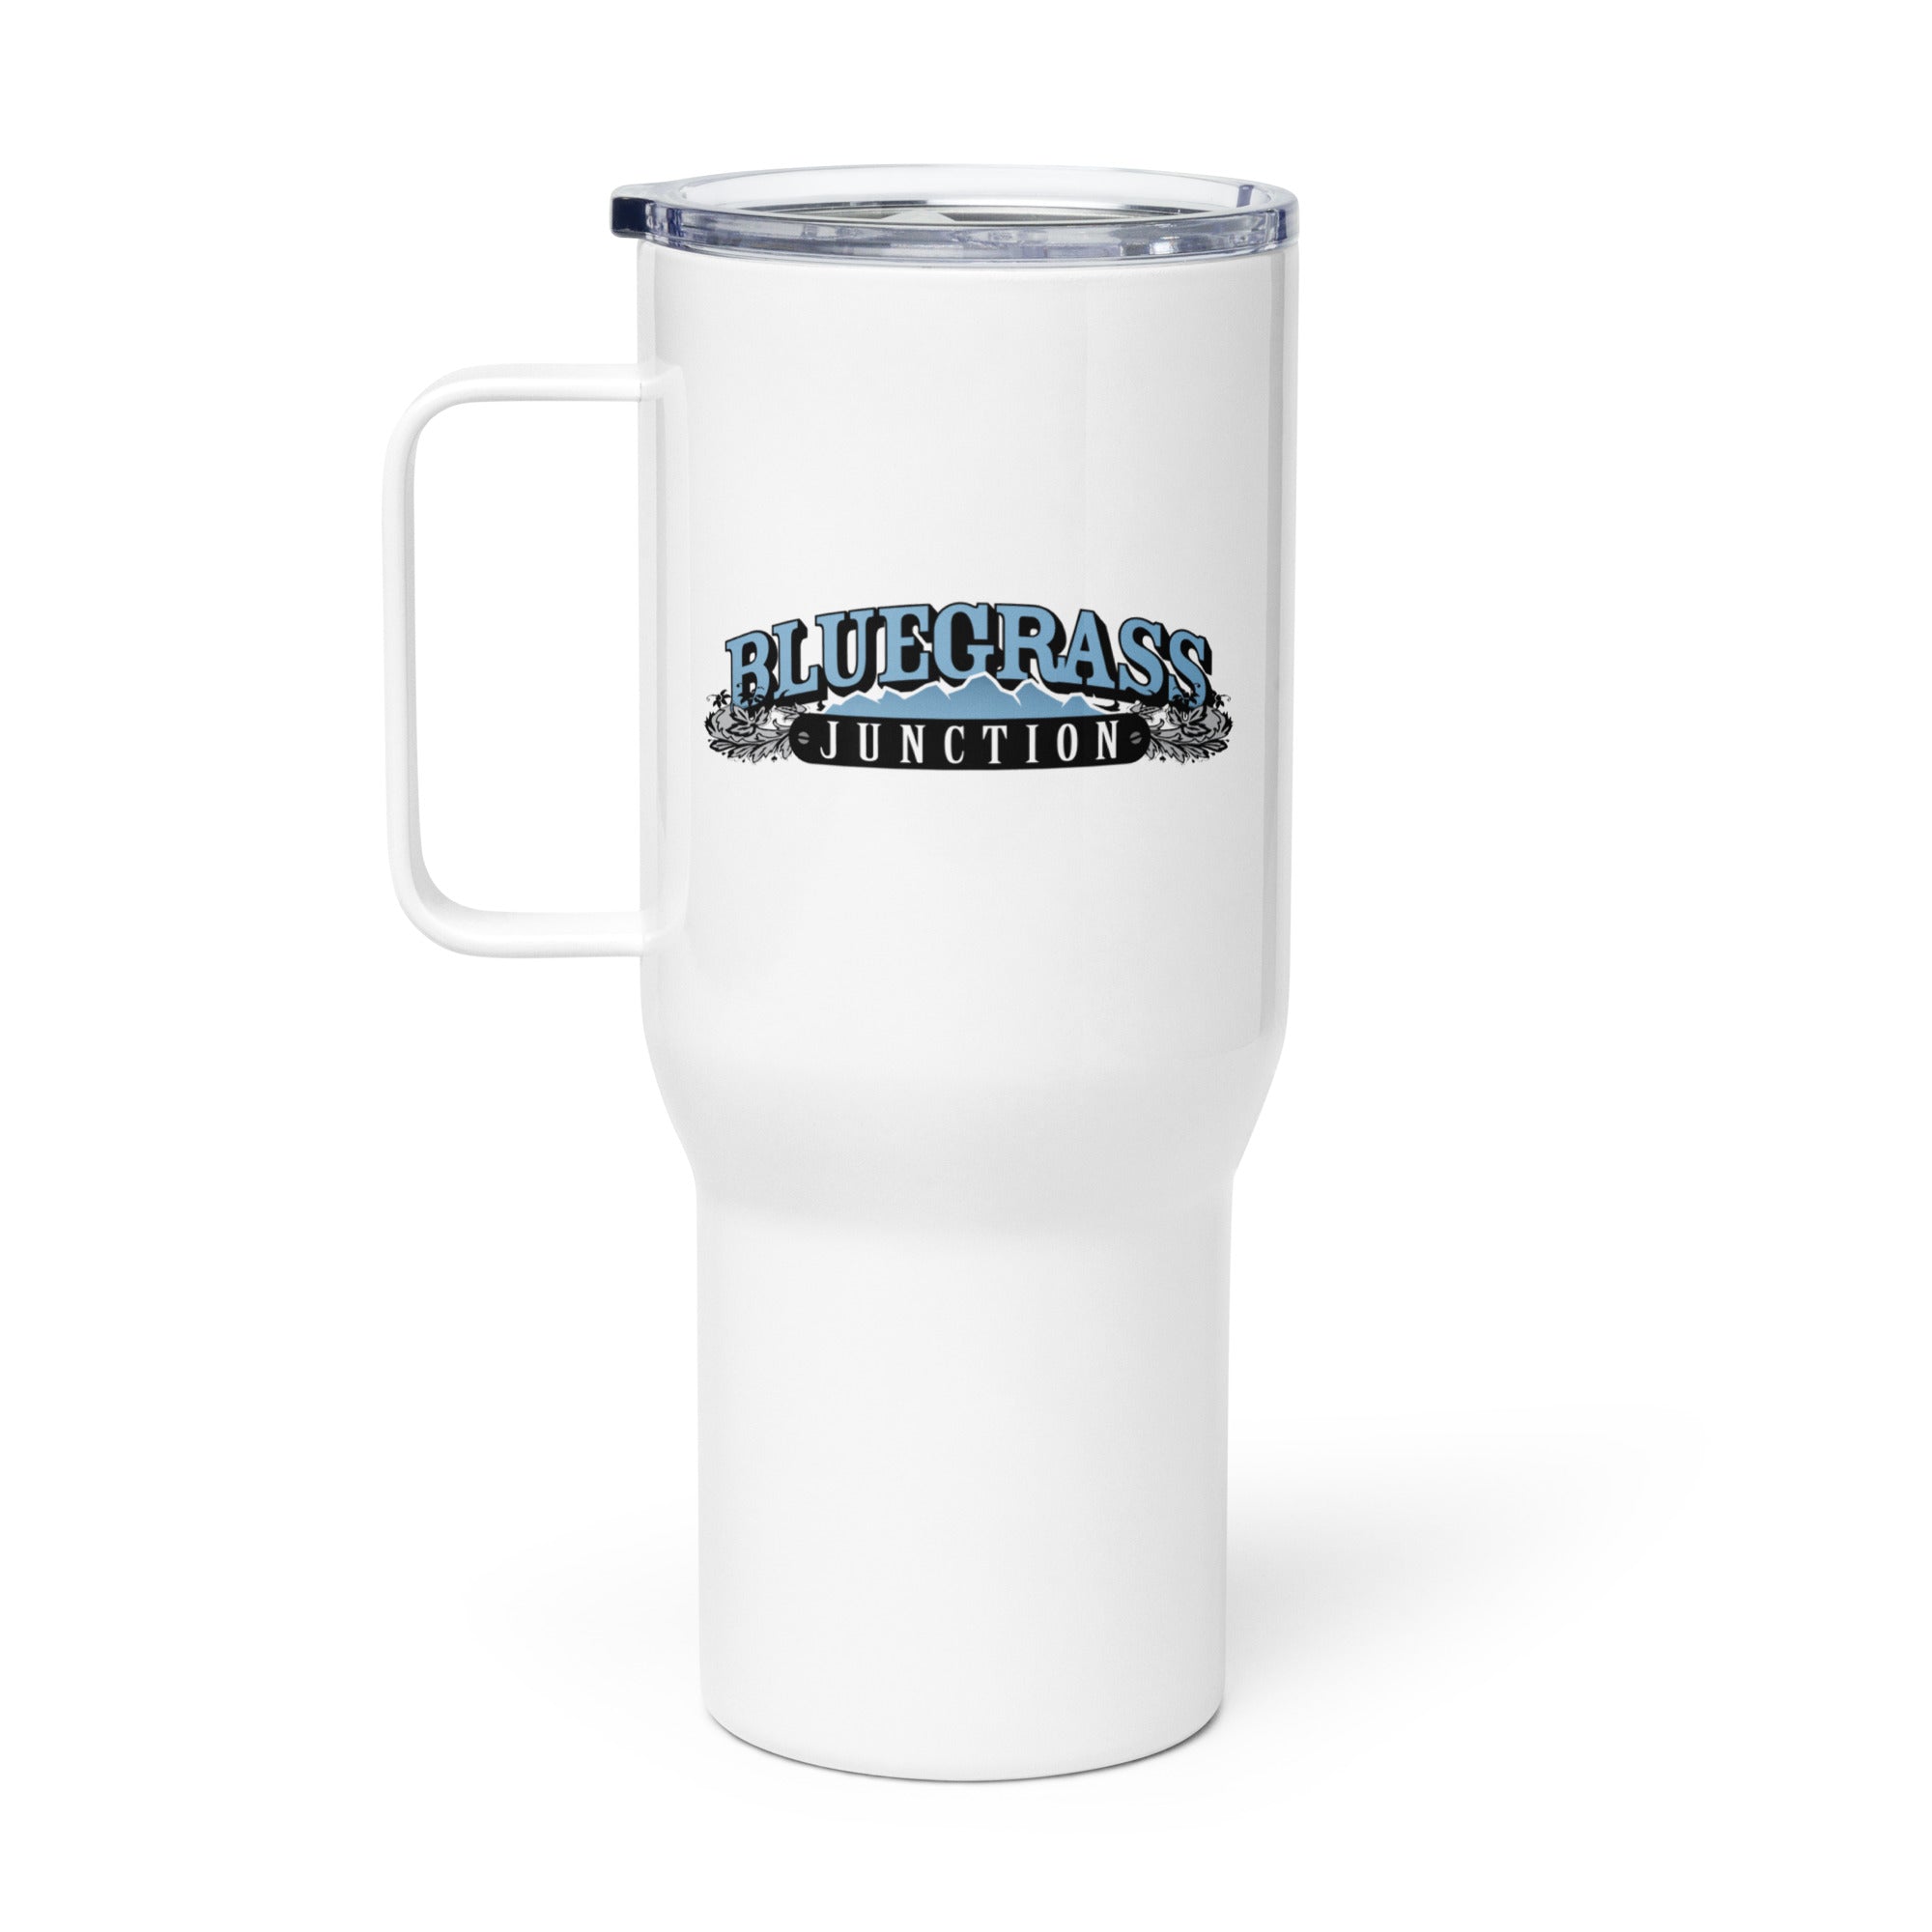 Bluegrass Junction: Travel Mug